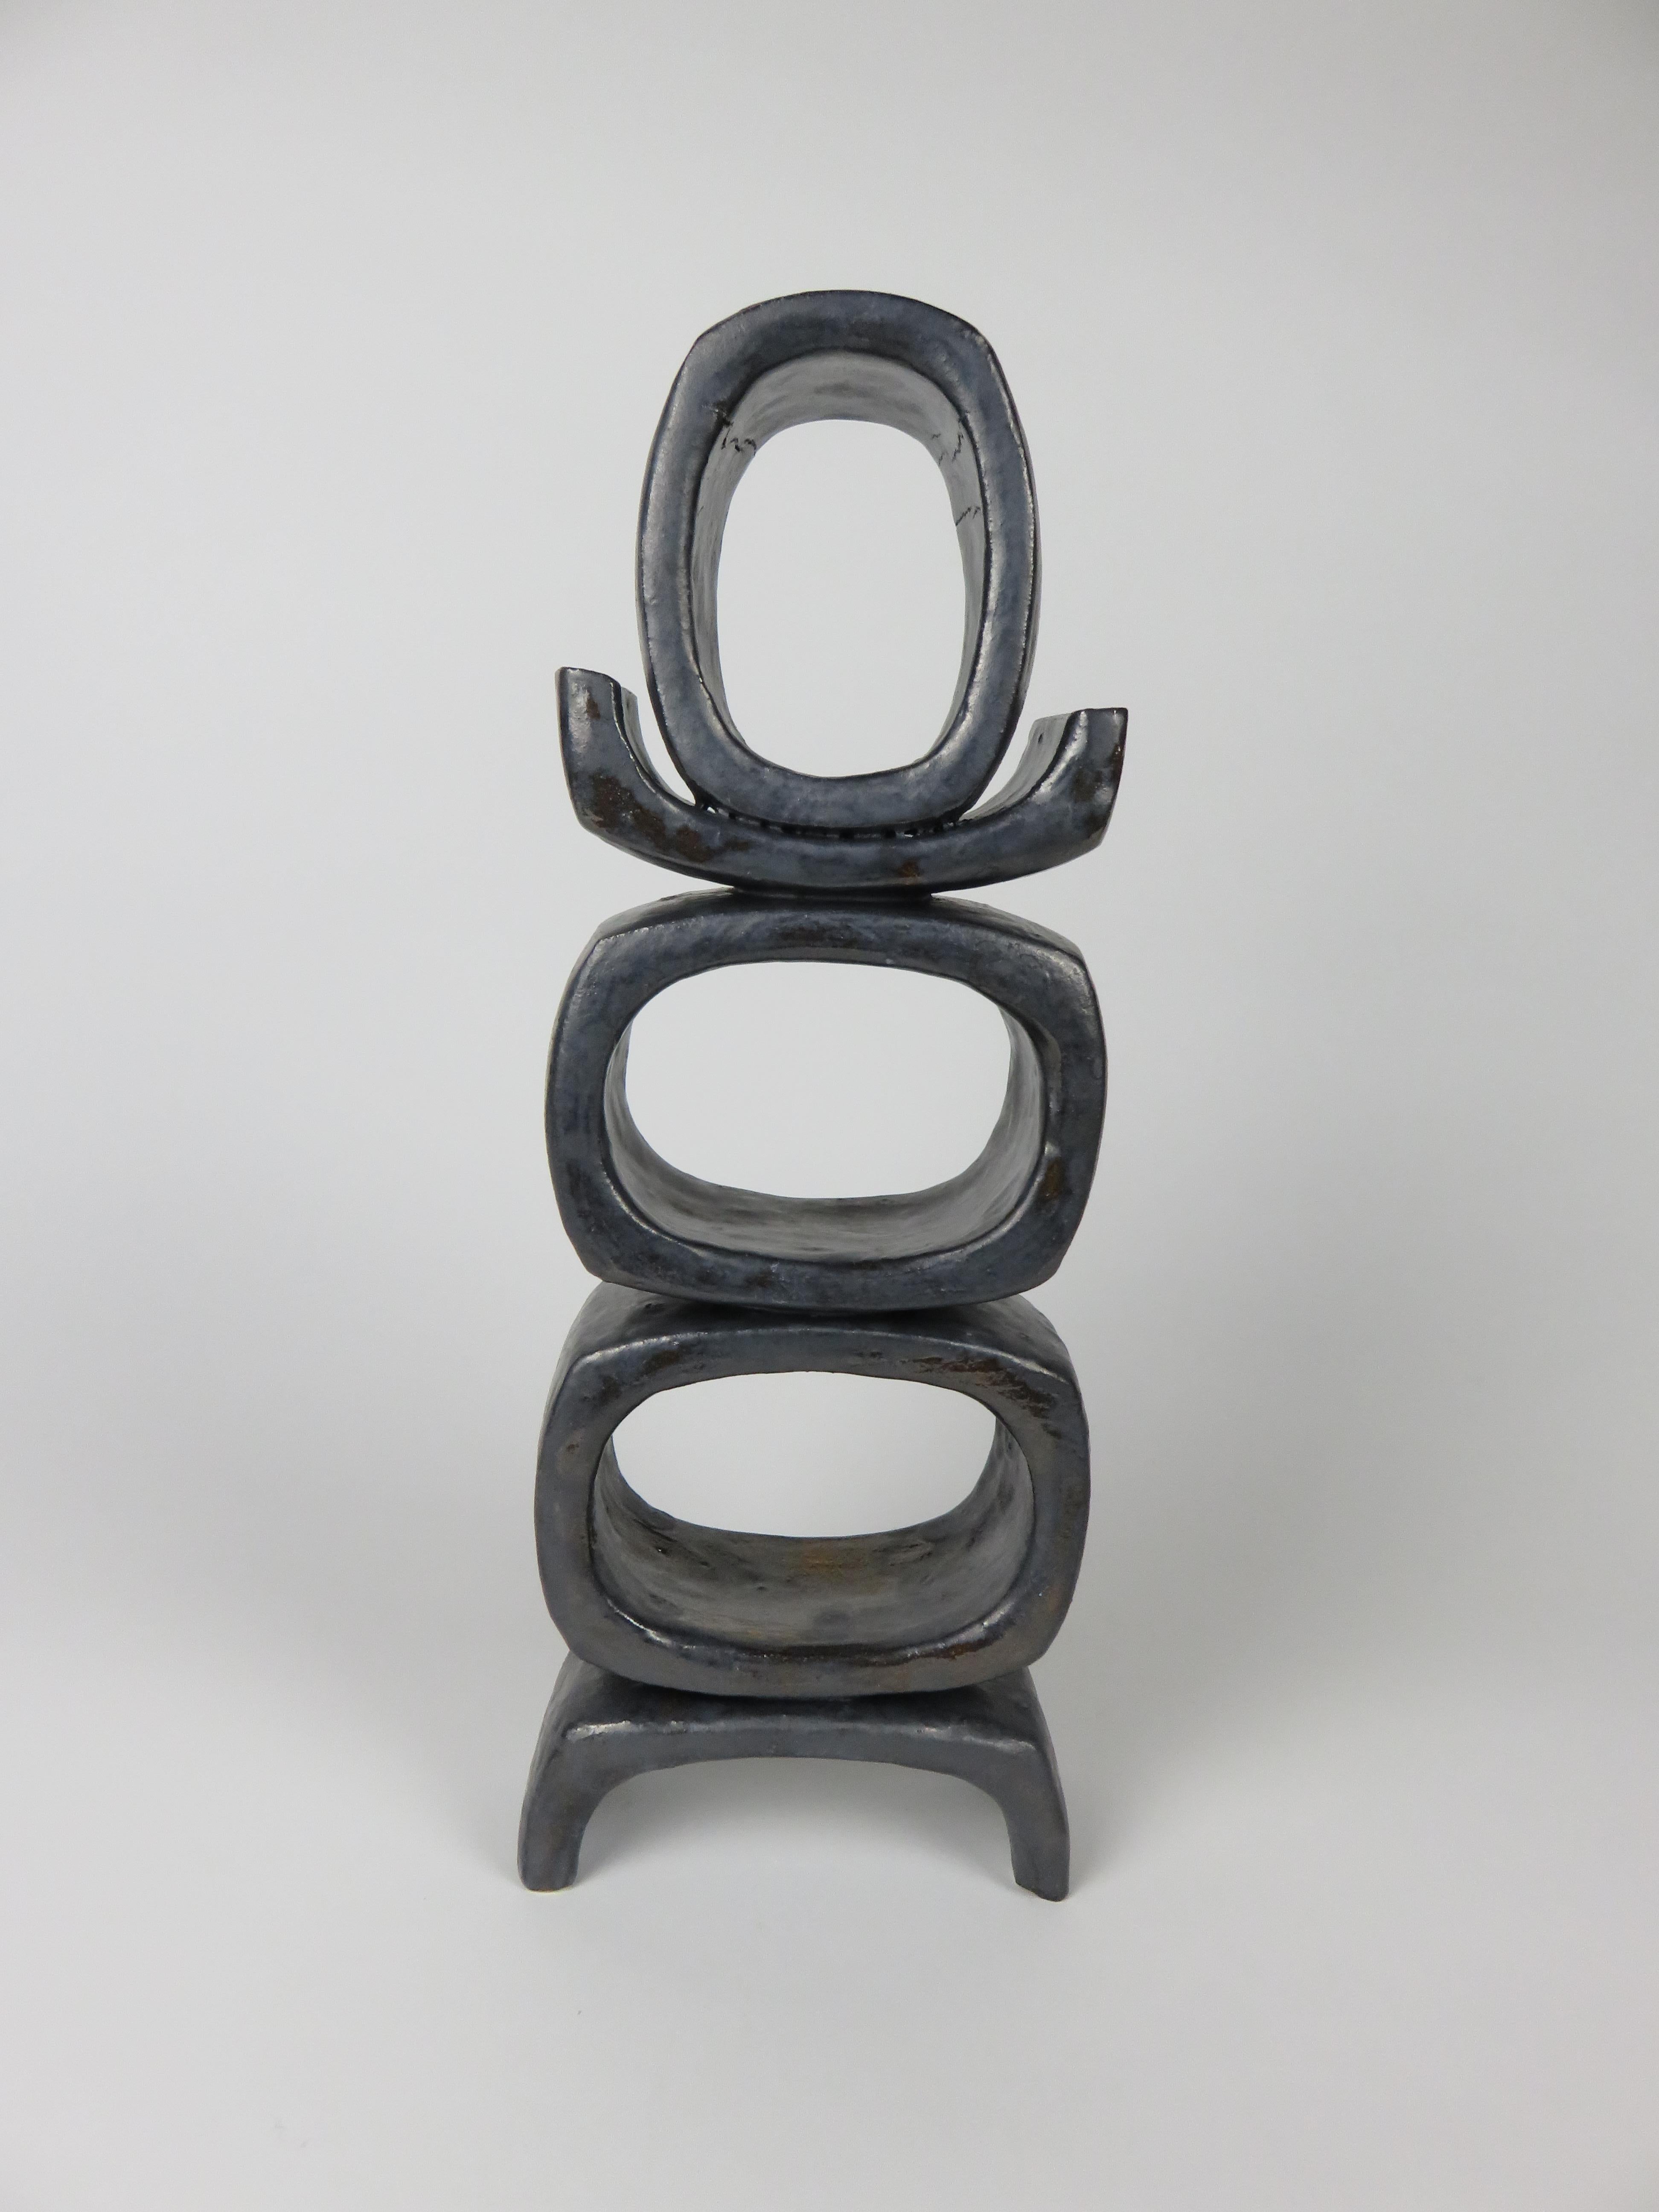 Organic Modern 3 Rectangular Ovals, Short Angled Legs, Metallic Black-Glazed Clay Sculpture #1